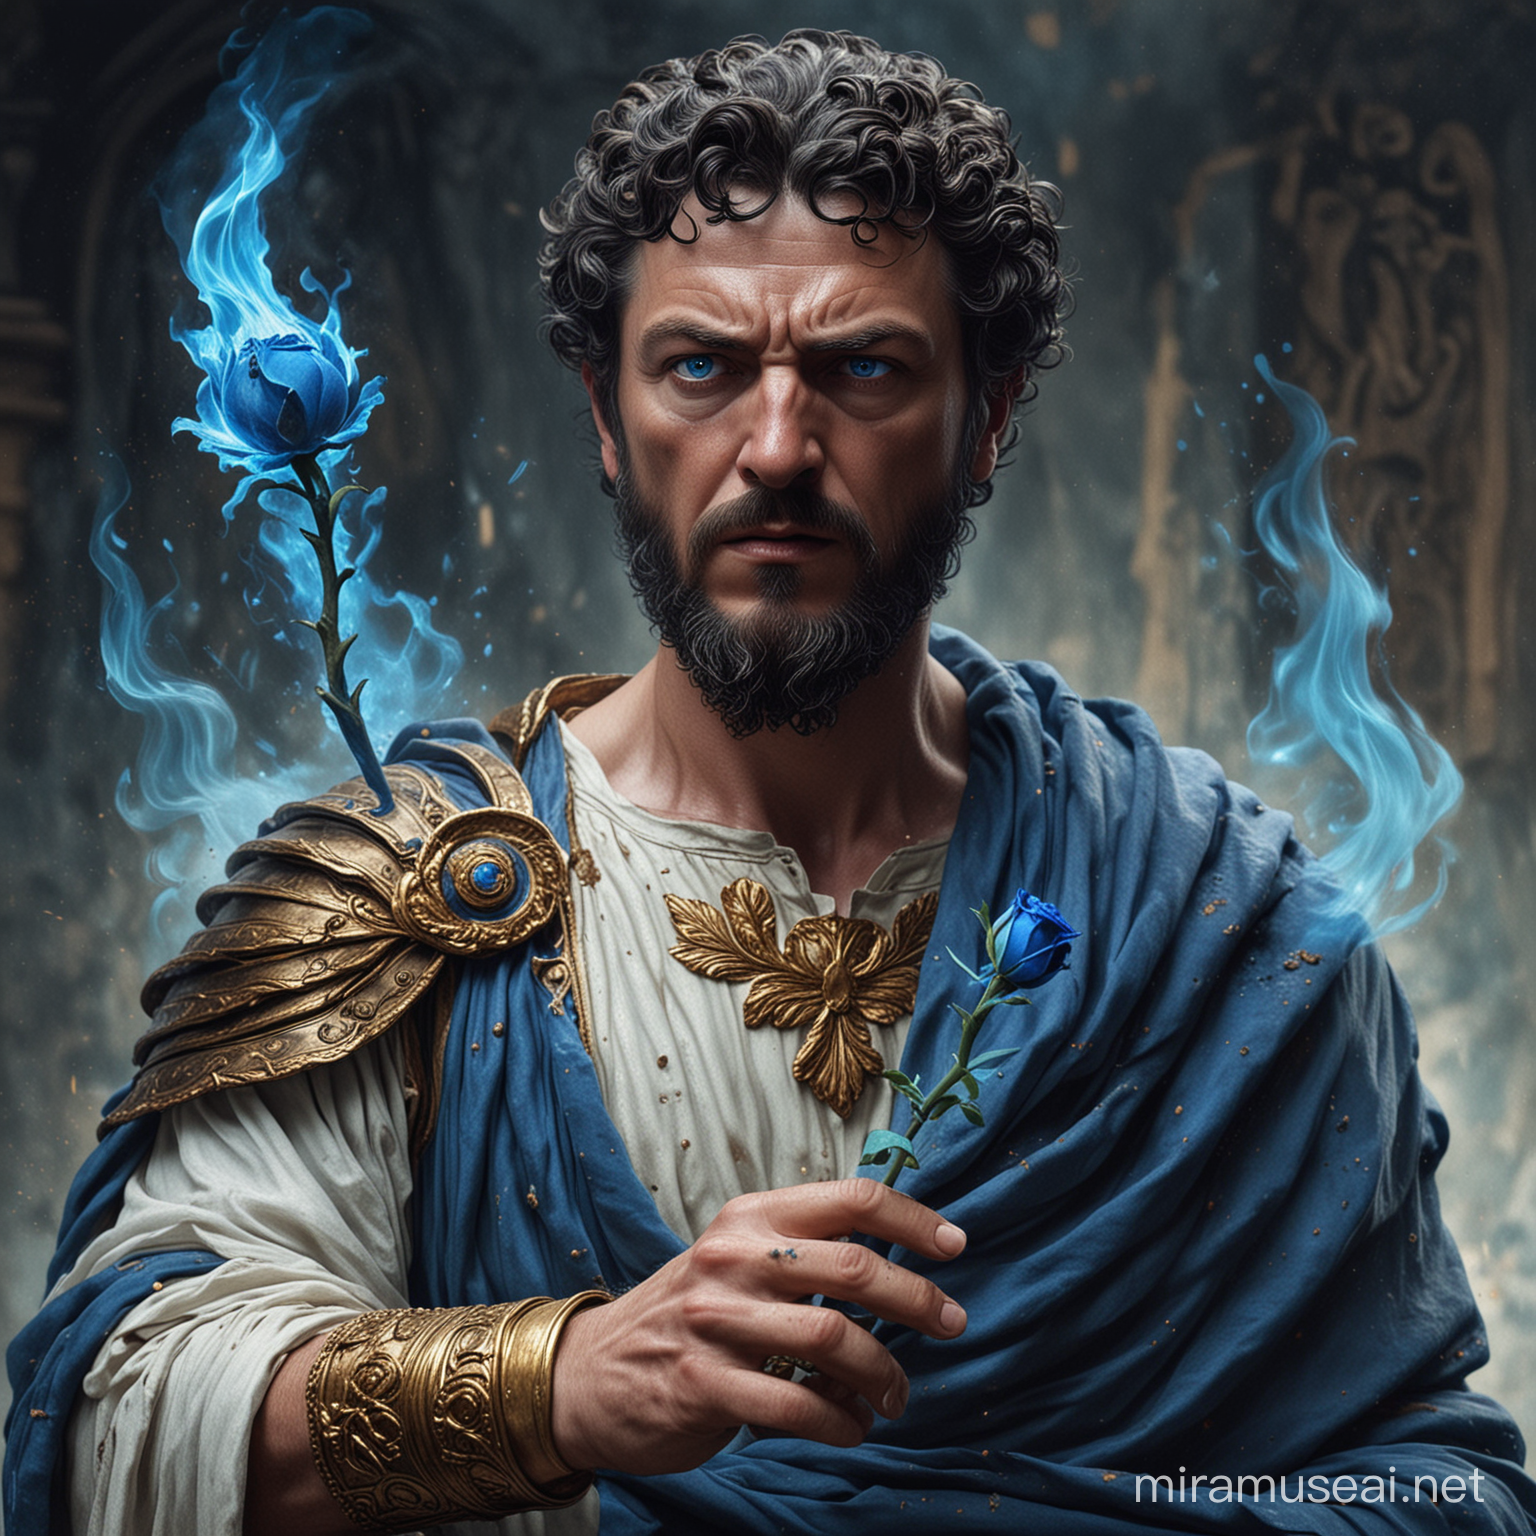 Marcus Aurelius with Blue Rose and Flaming Arm